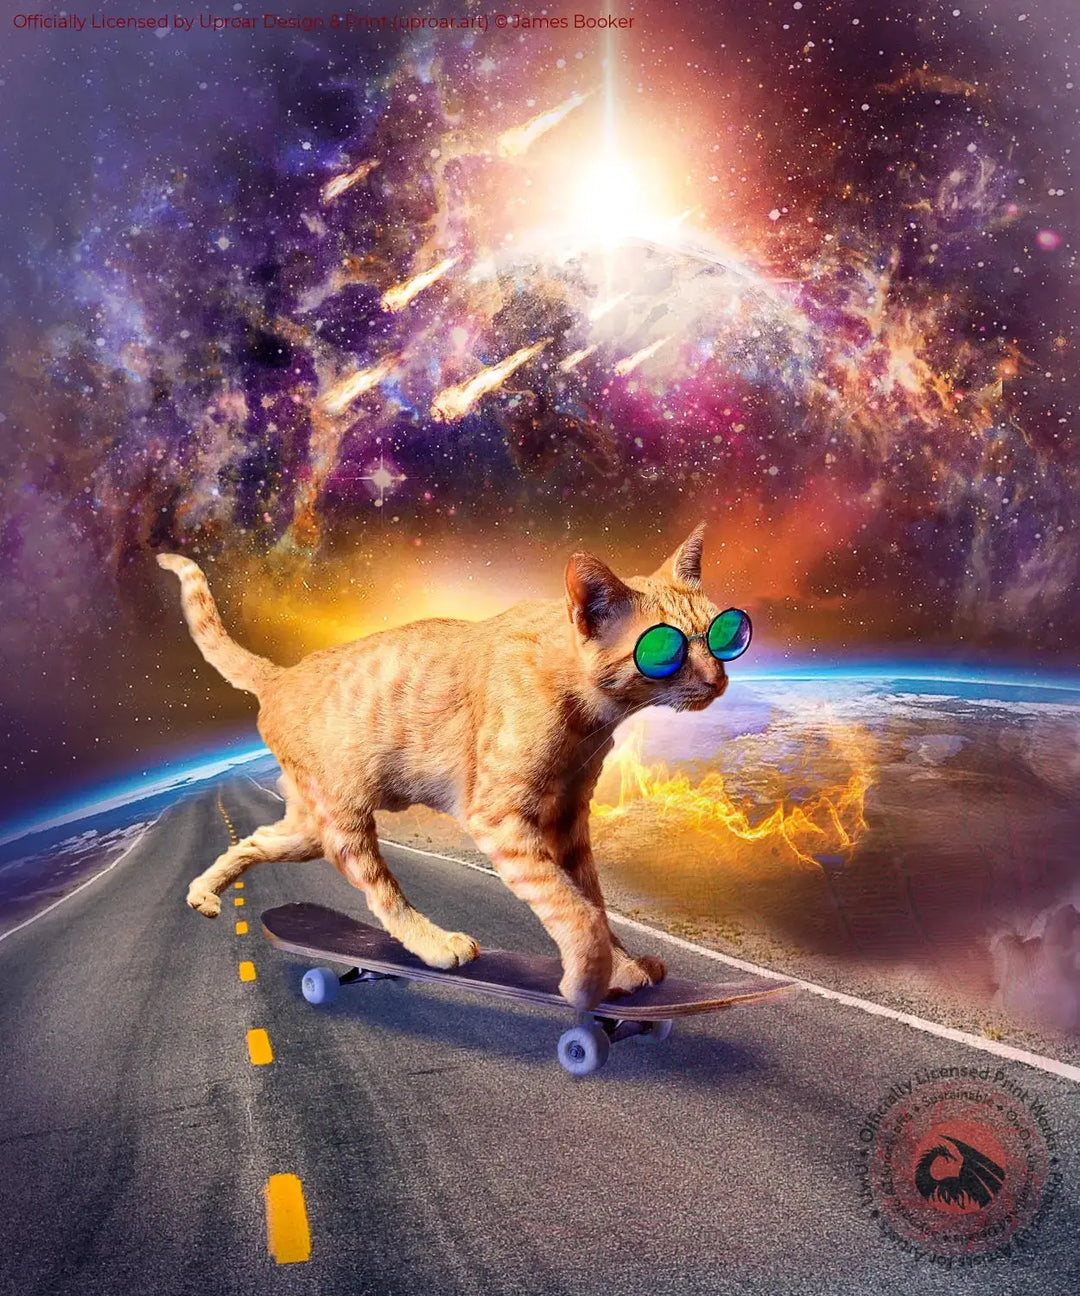 Cat Skateboarding In Space James Booker